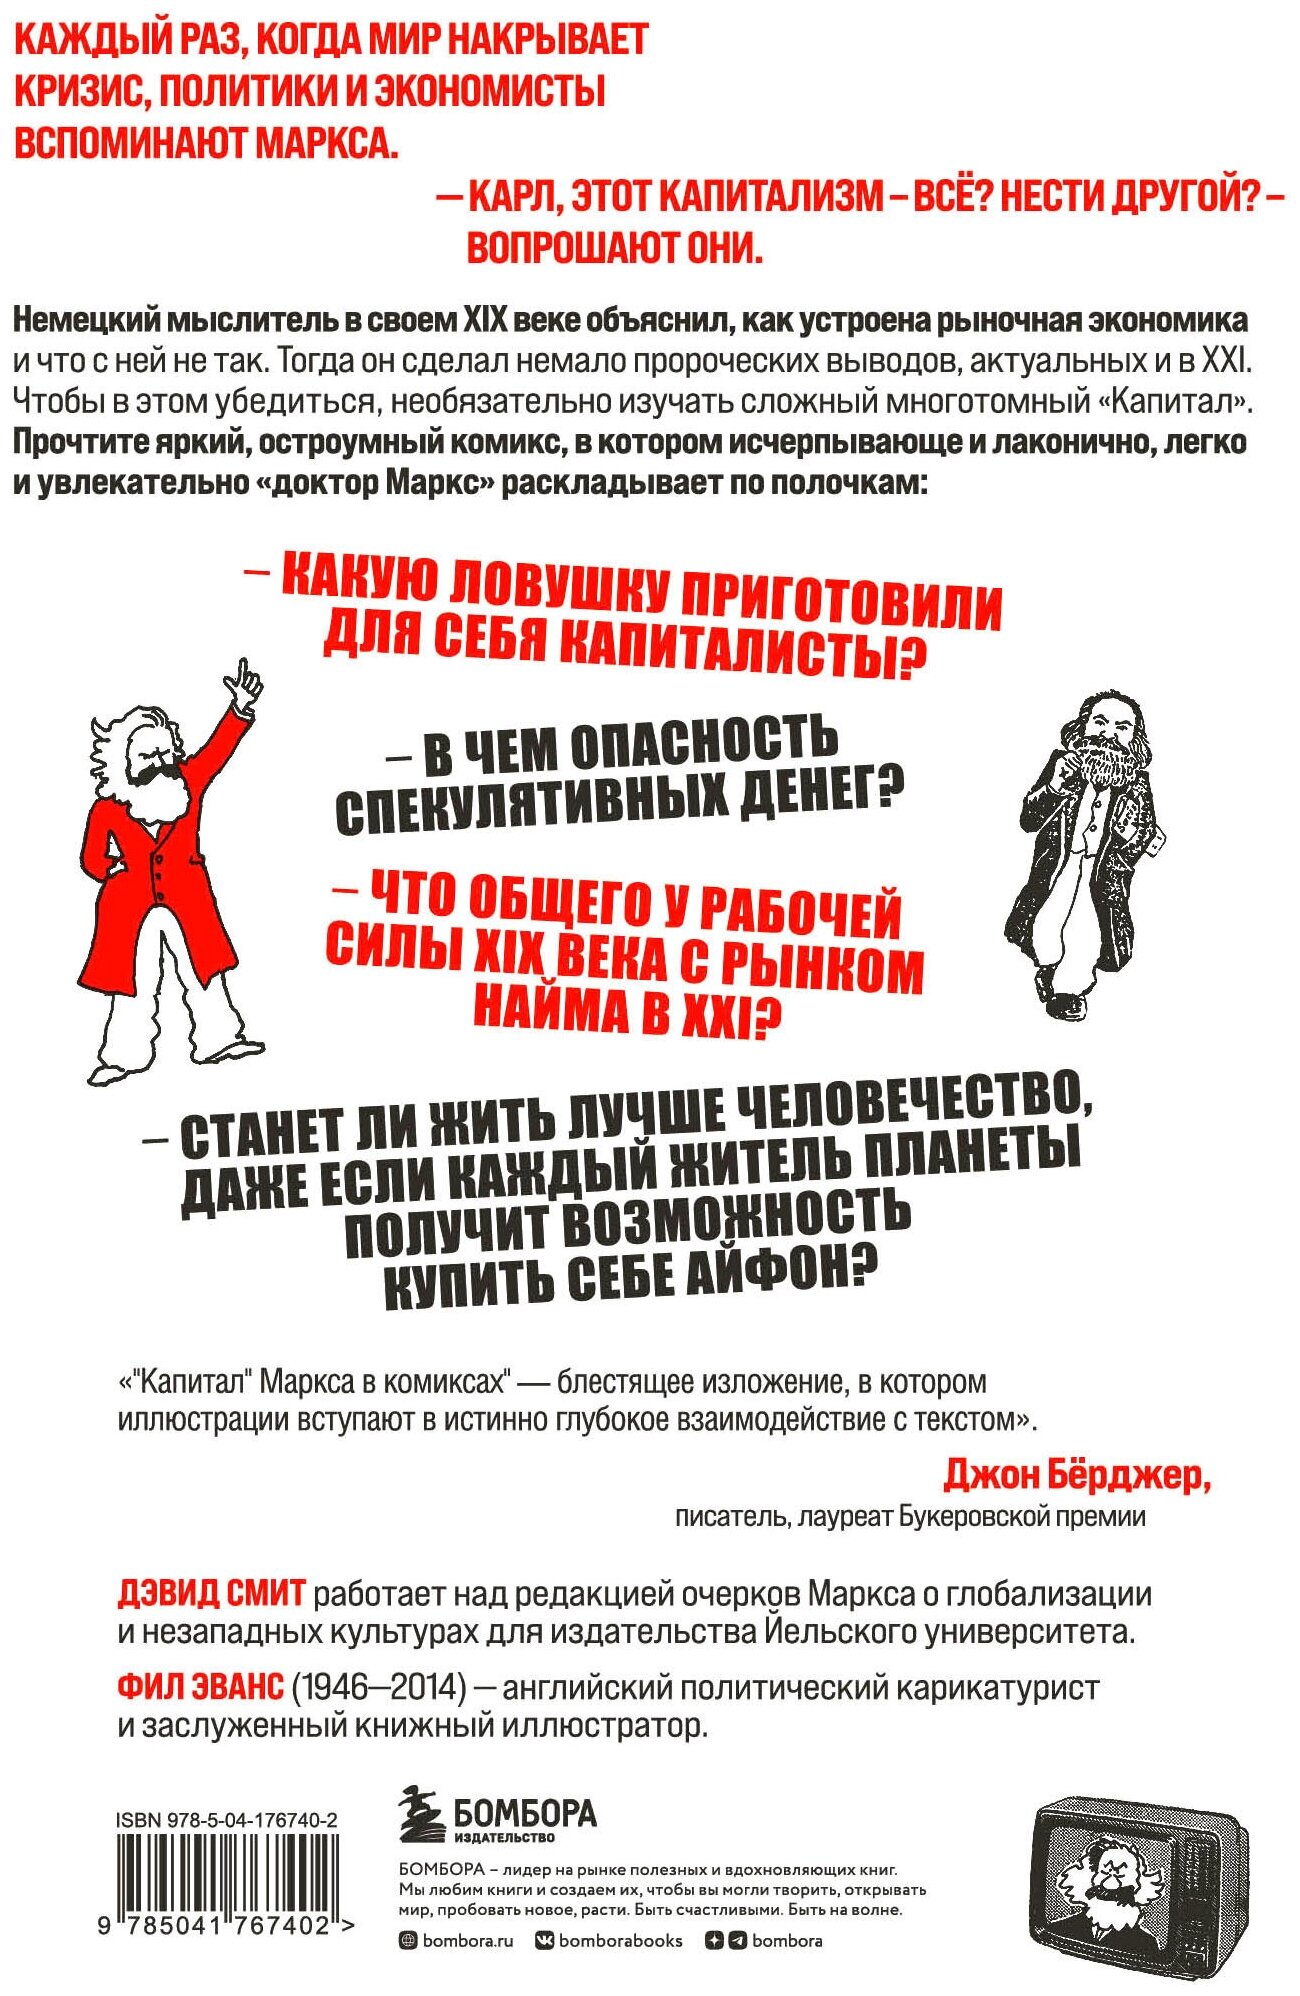 Капитал Маркса в комиксах новое оформление - фото №2